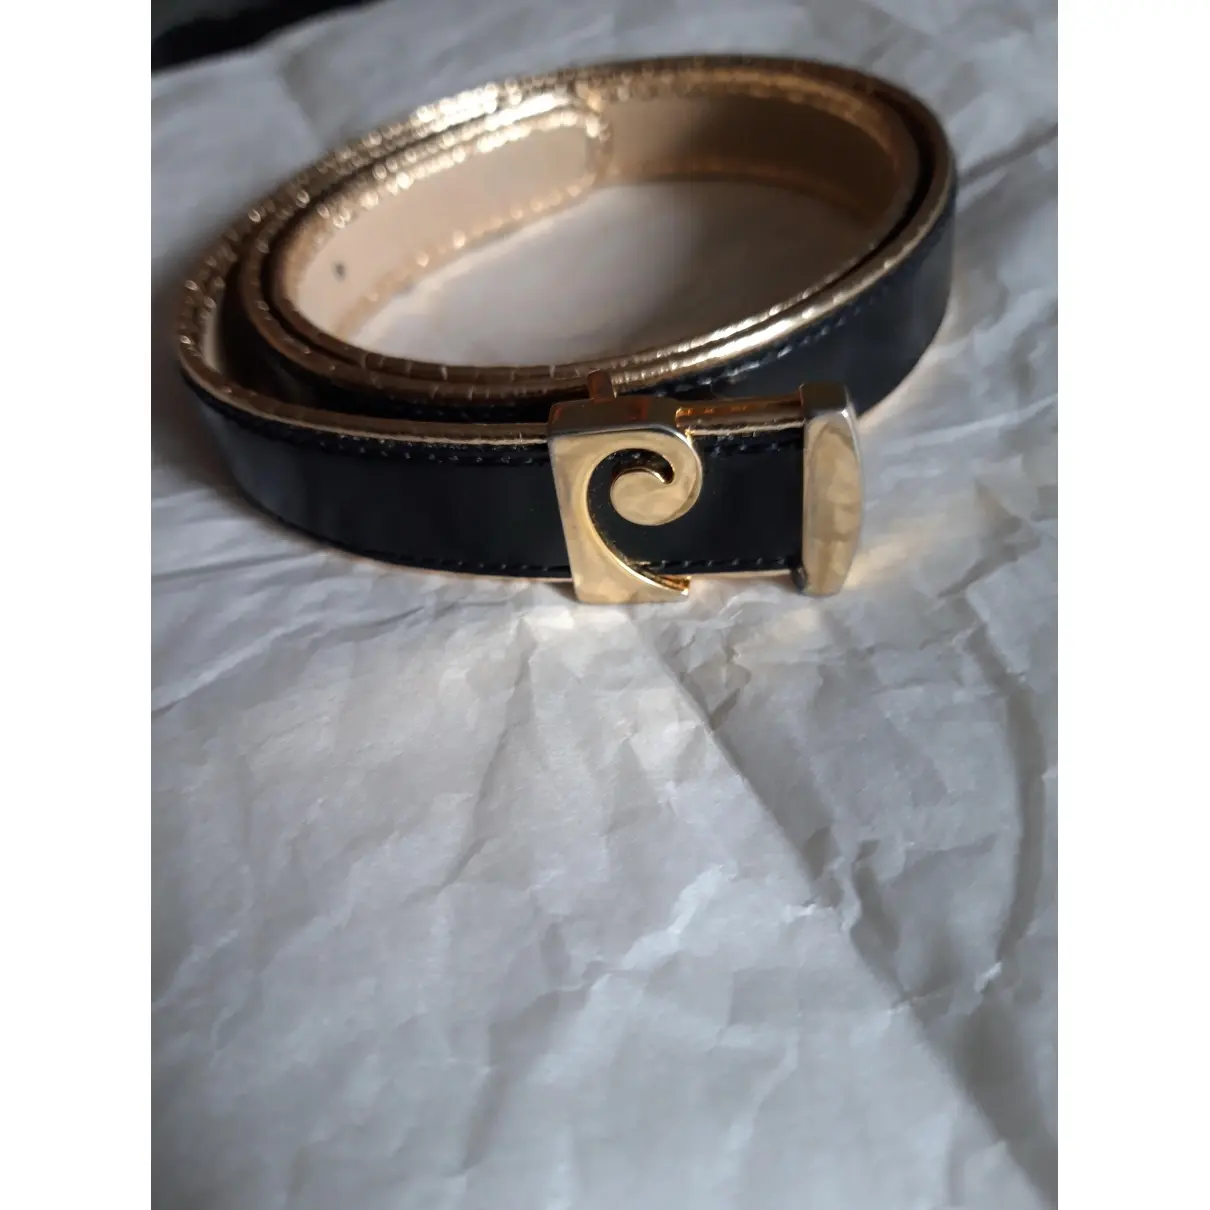 Buy Pierre Cardin Leather belt online - Vintage